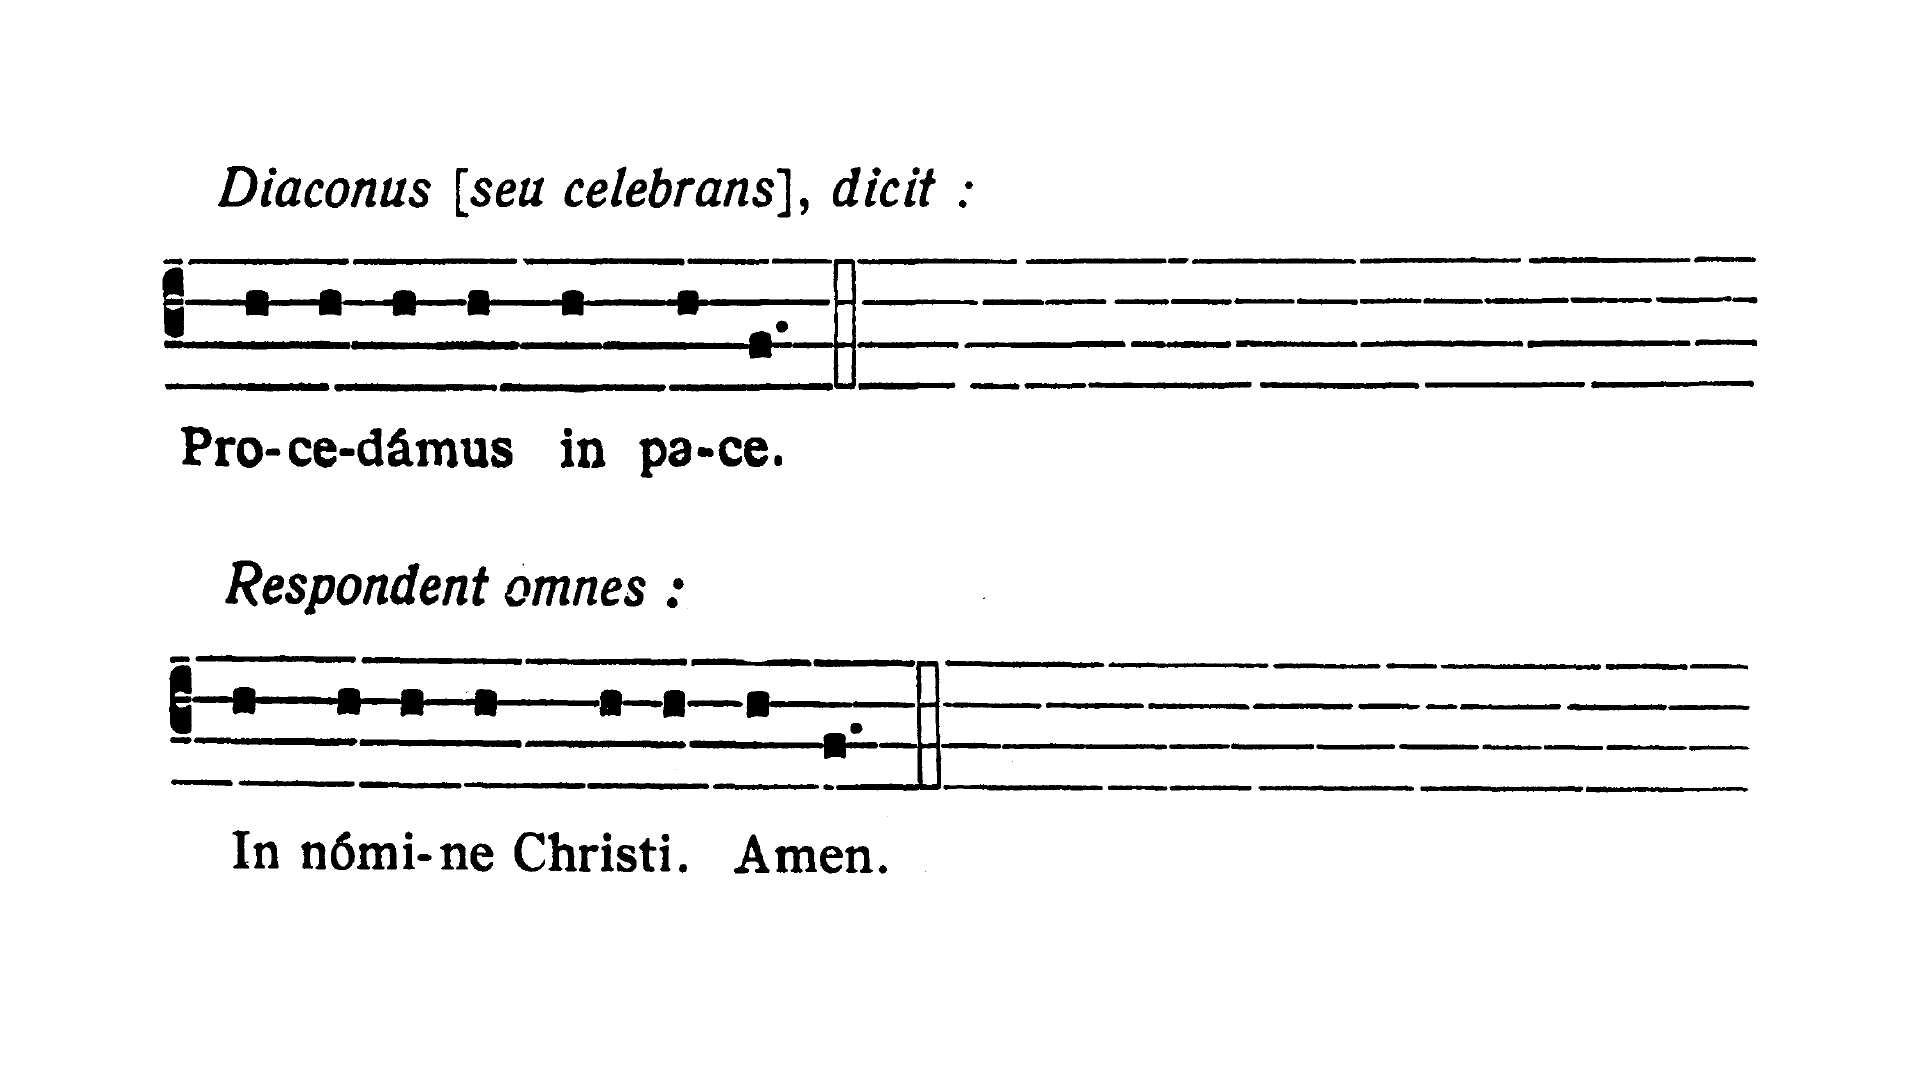 Dominica II in Passionis seu in Palmis (Palm Sunday) - Procedamus